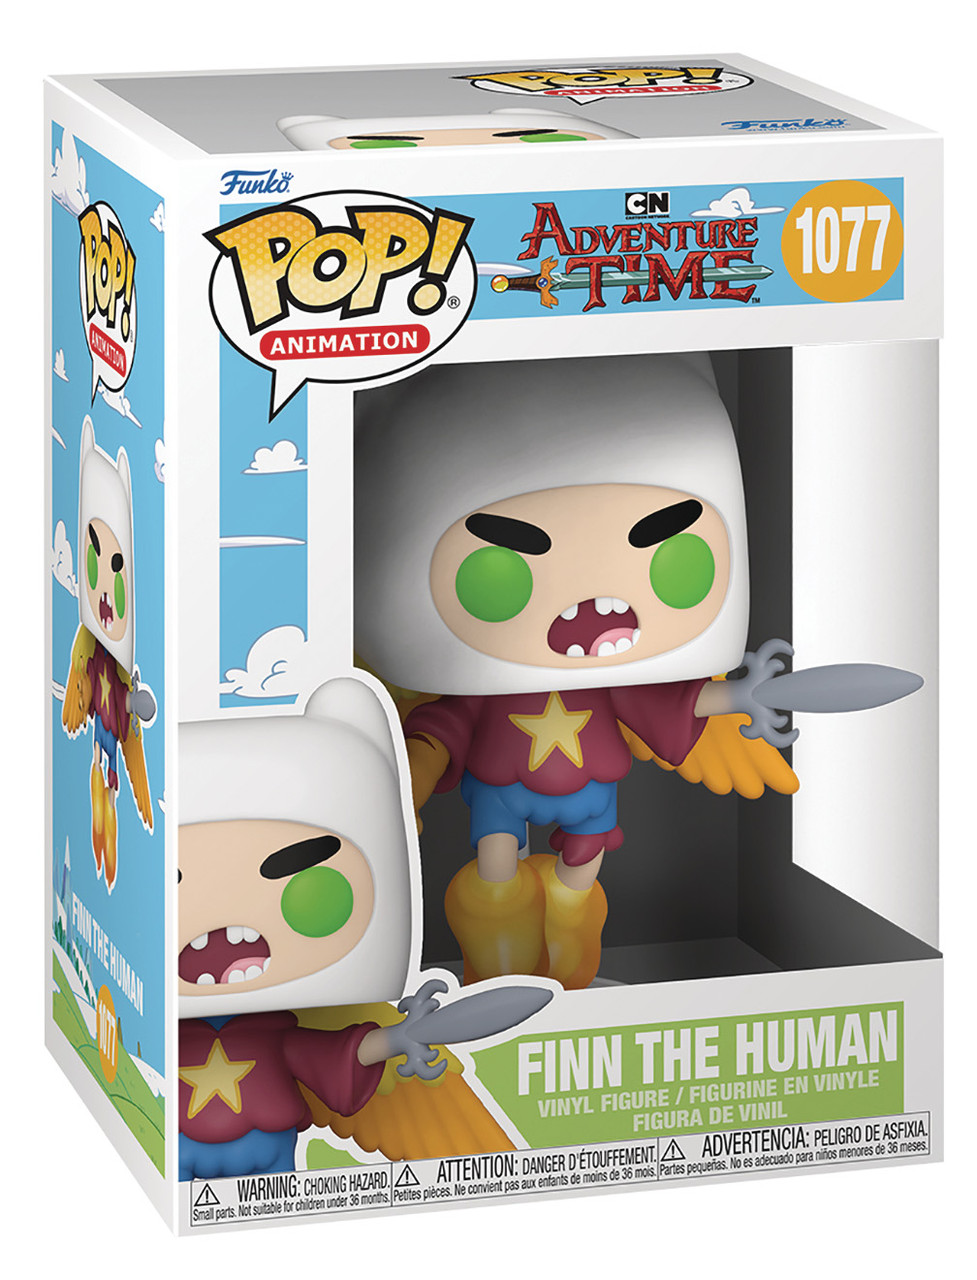 Фігурка Funko Pop Час пригод Фін Adventure time Finn the Human 10 cм AT FH 1077 - фото 3